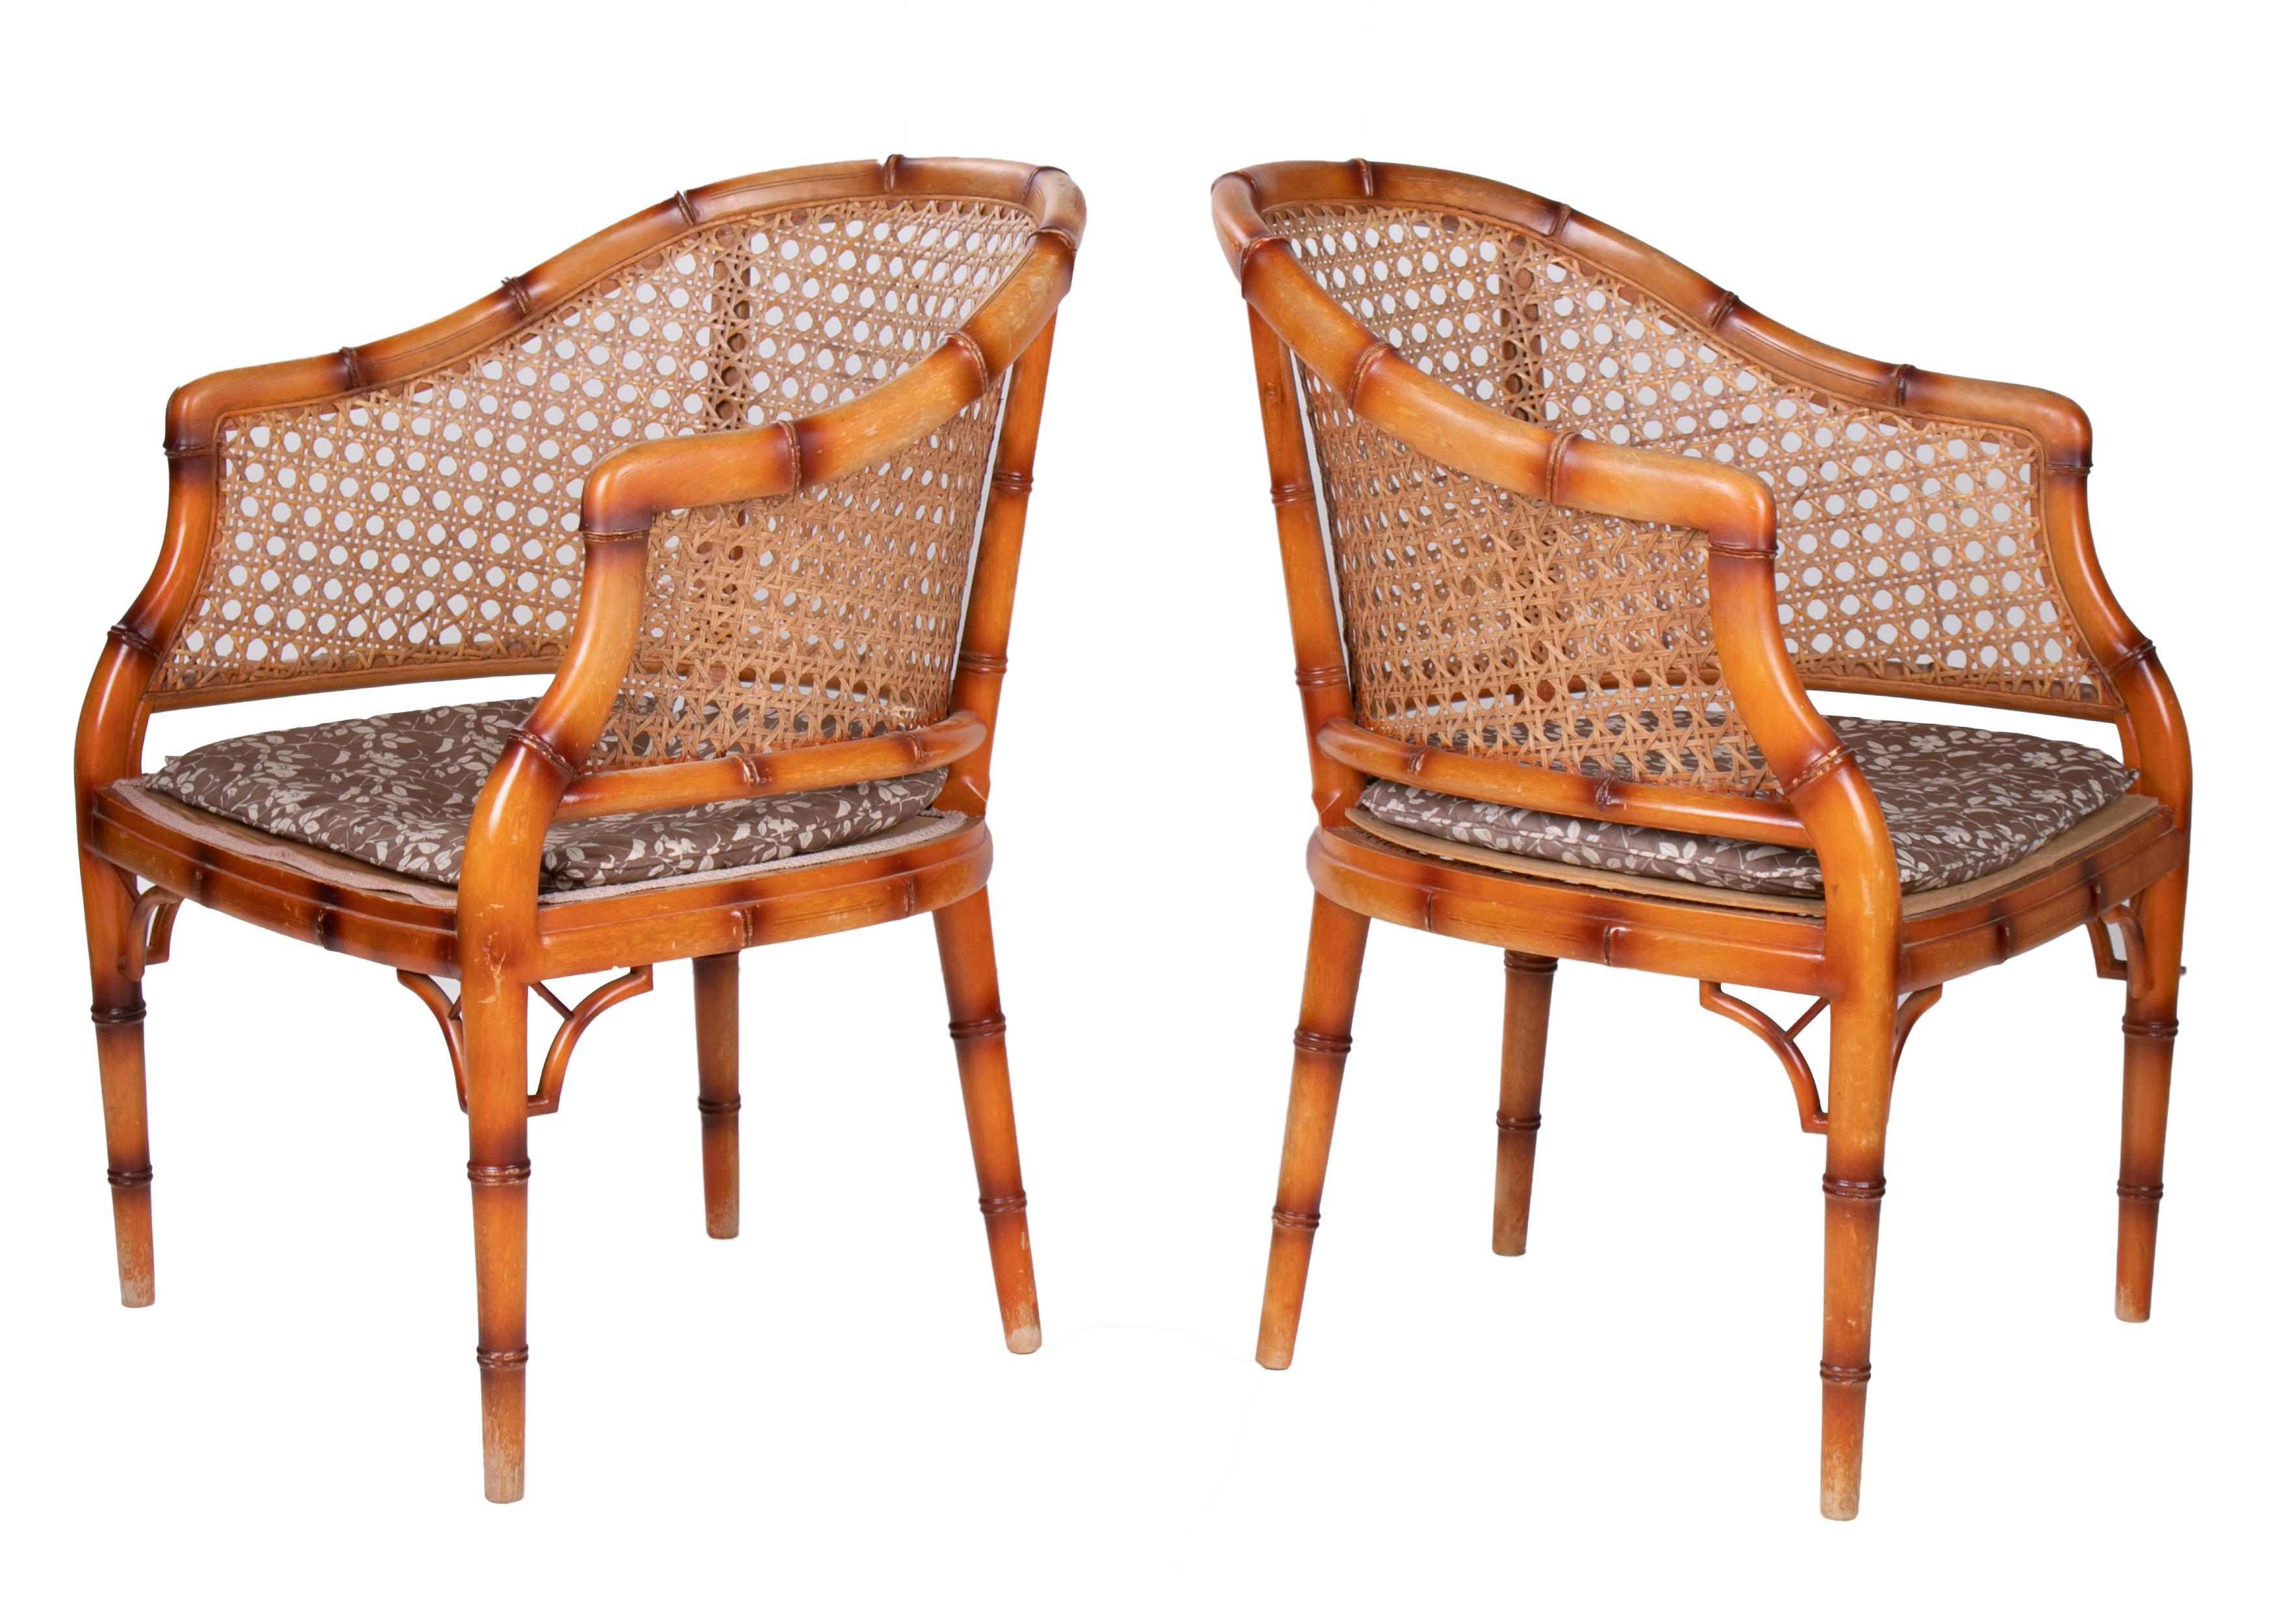 1970s pair of Spanish wooden armchairs imitating bamboo.